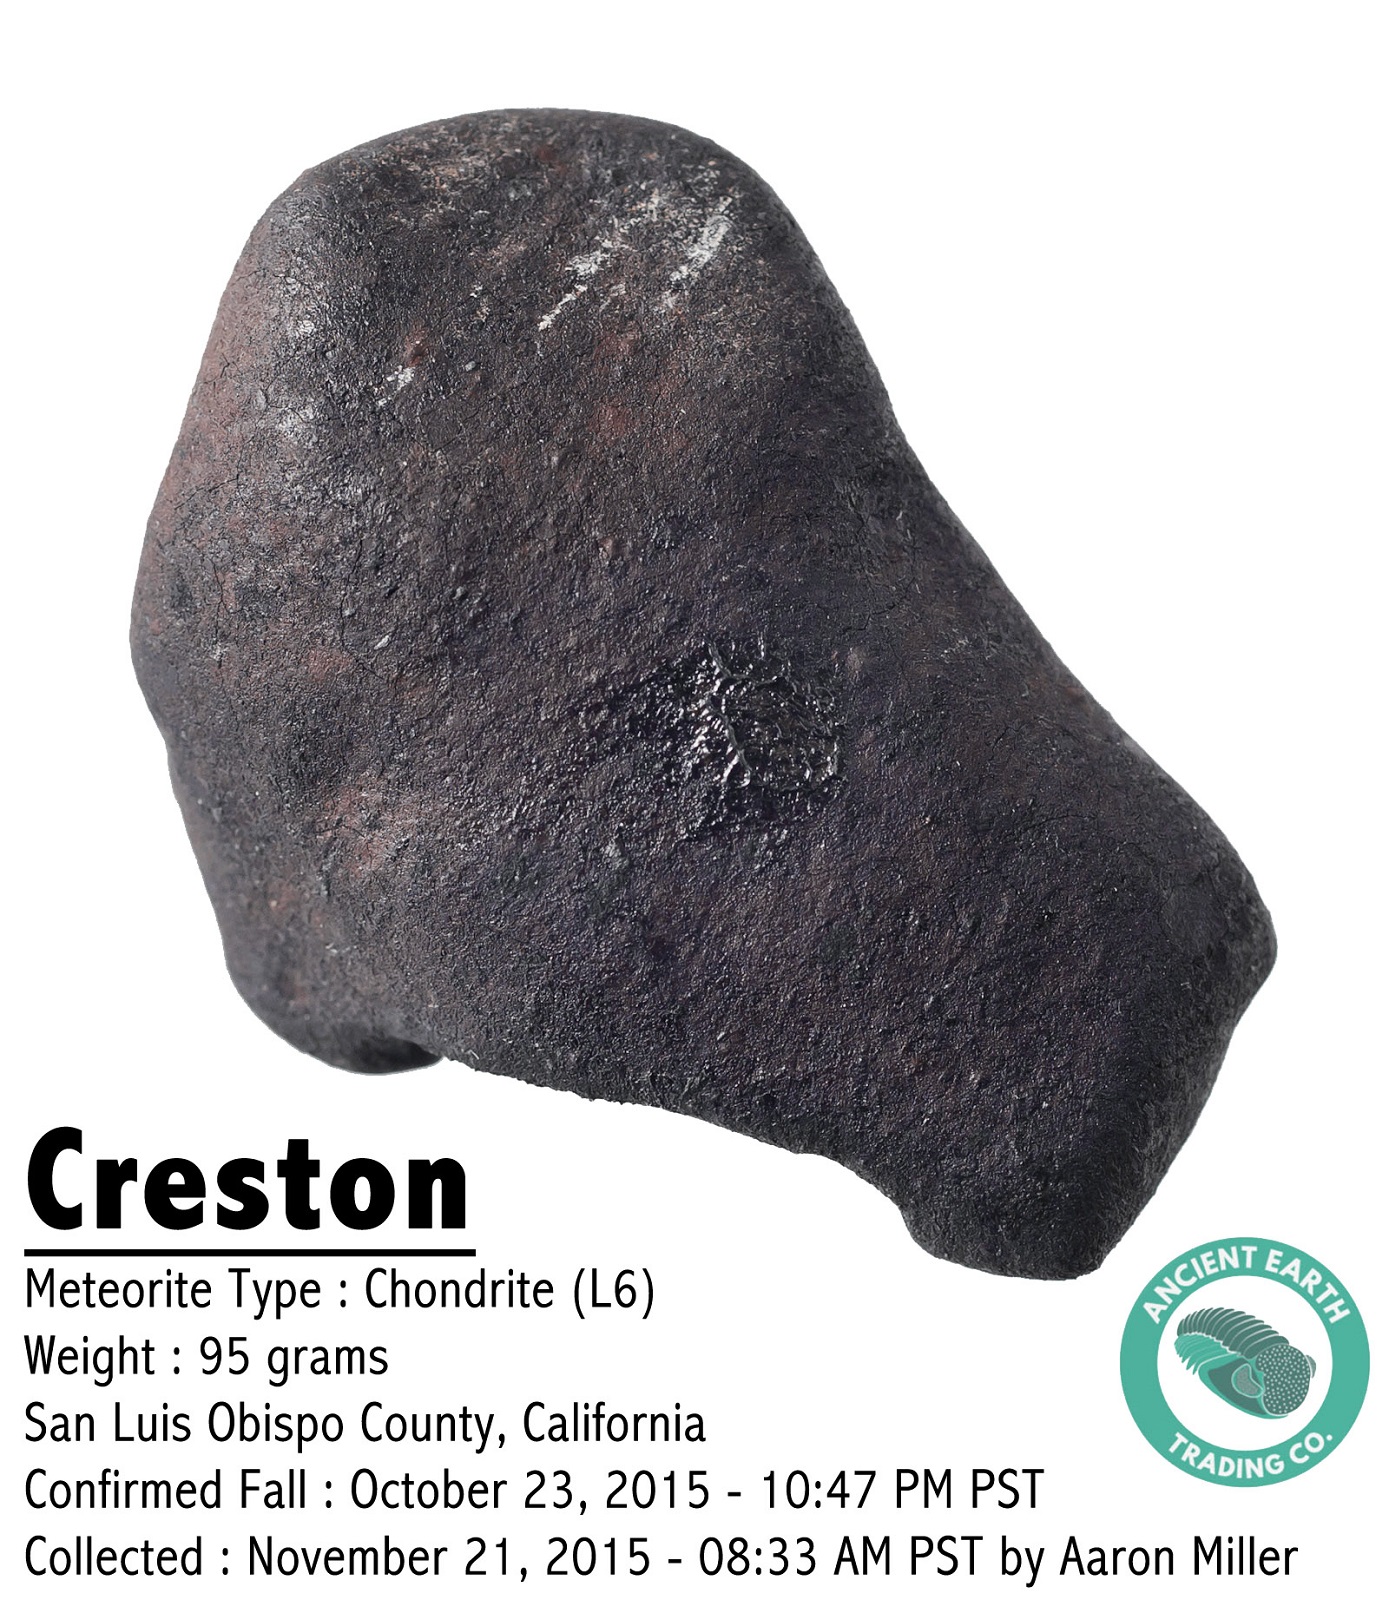 Creston meteorite